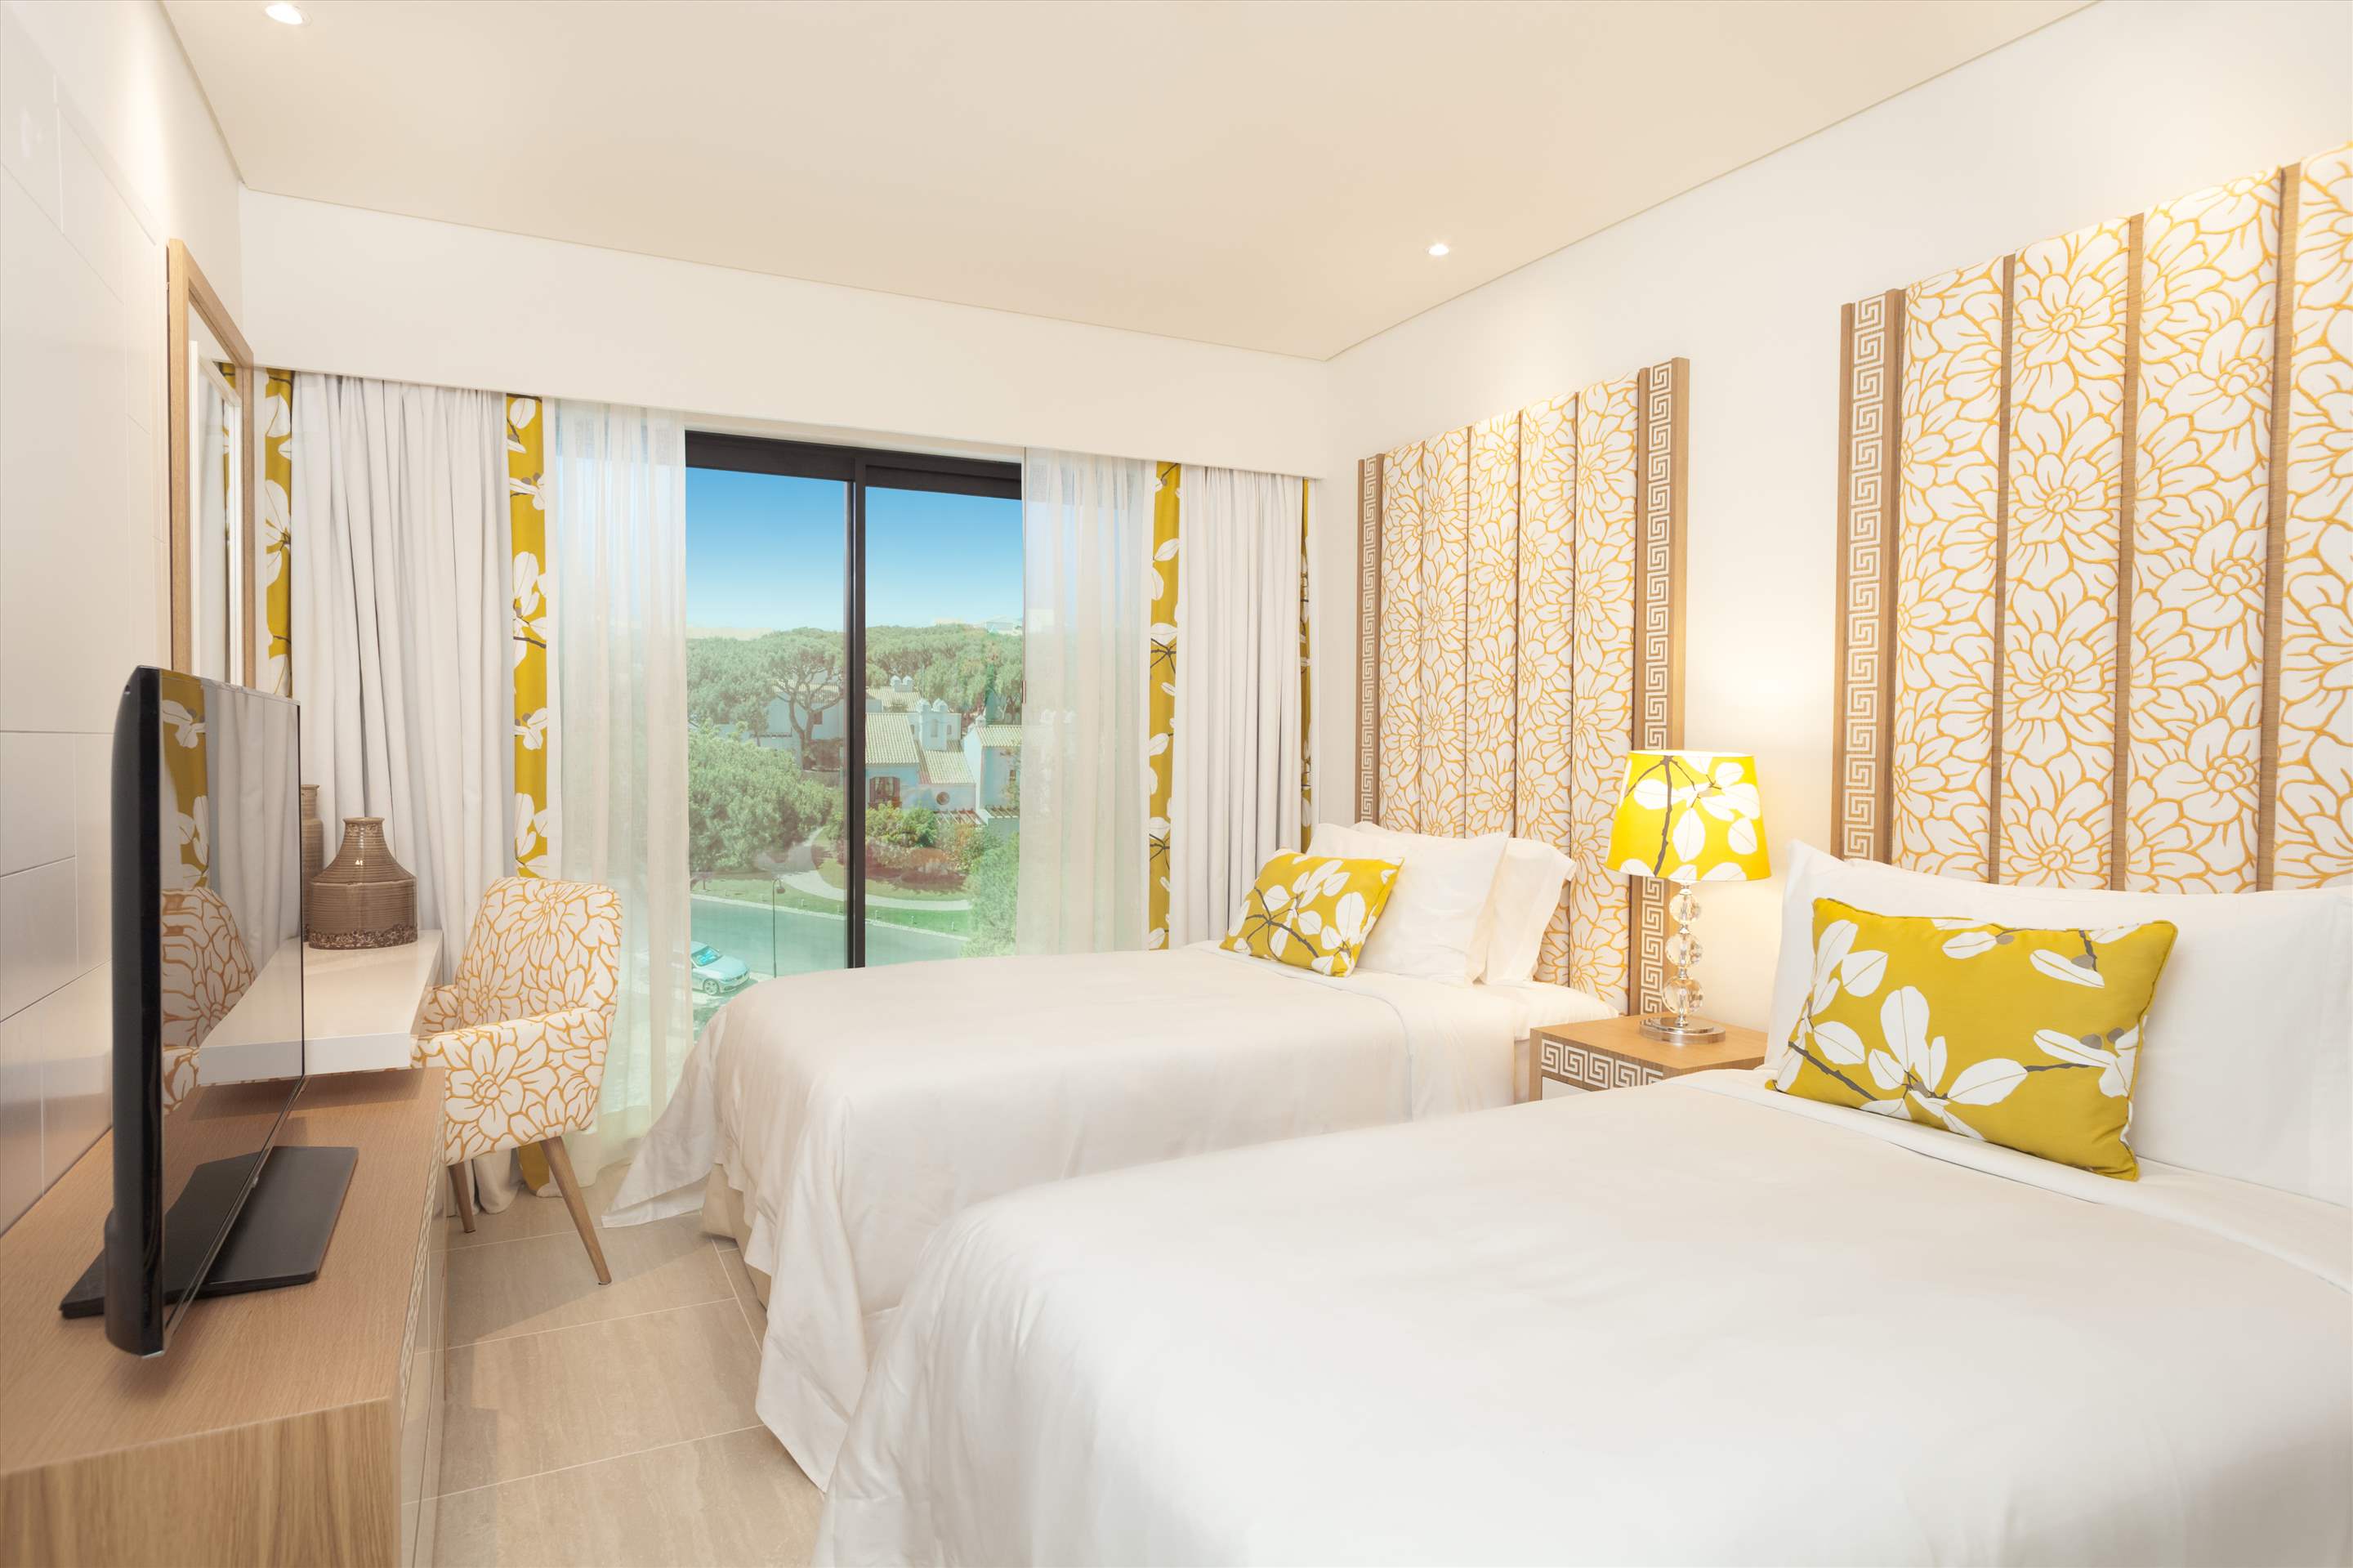 Pine Cliffs Gardens, Three Bedroom Suite, S/C Basis, 3 bedroom apartment in Pine Cliffs Resort, Algarve Photo #13